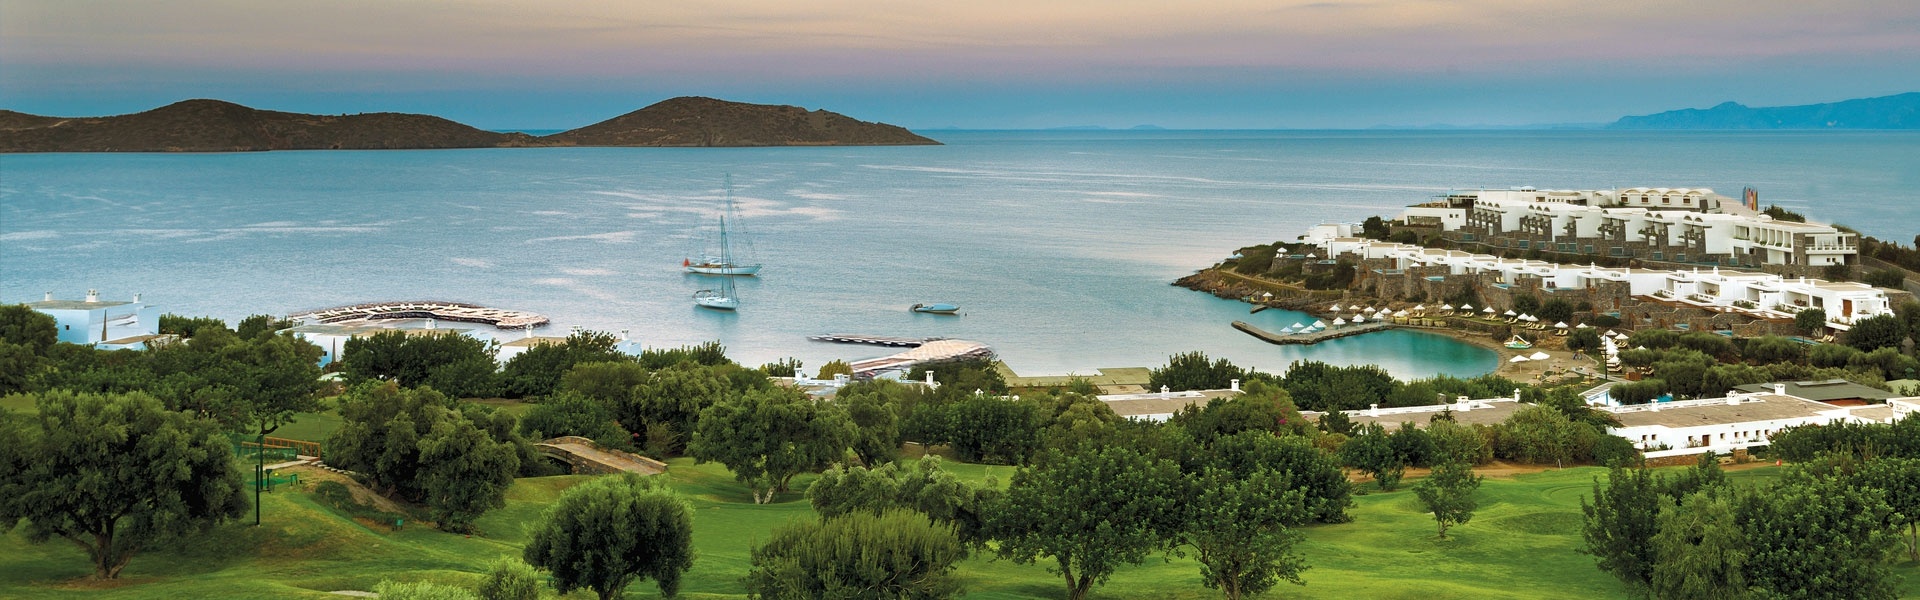 Porto Elounda Golf & Spa Resort - Background